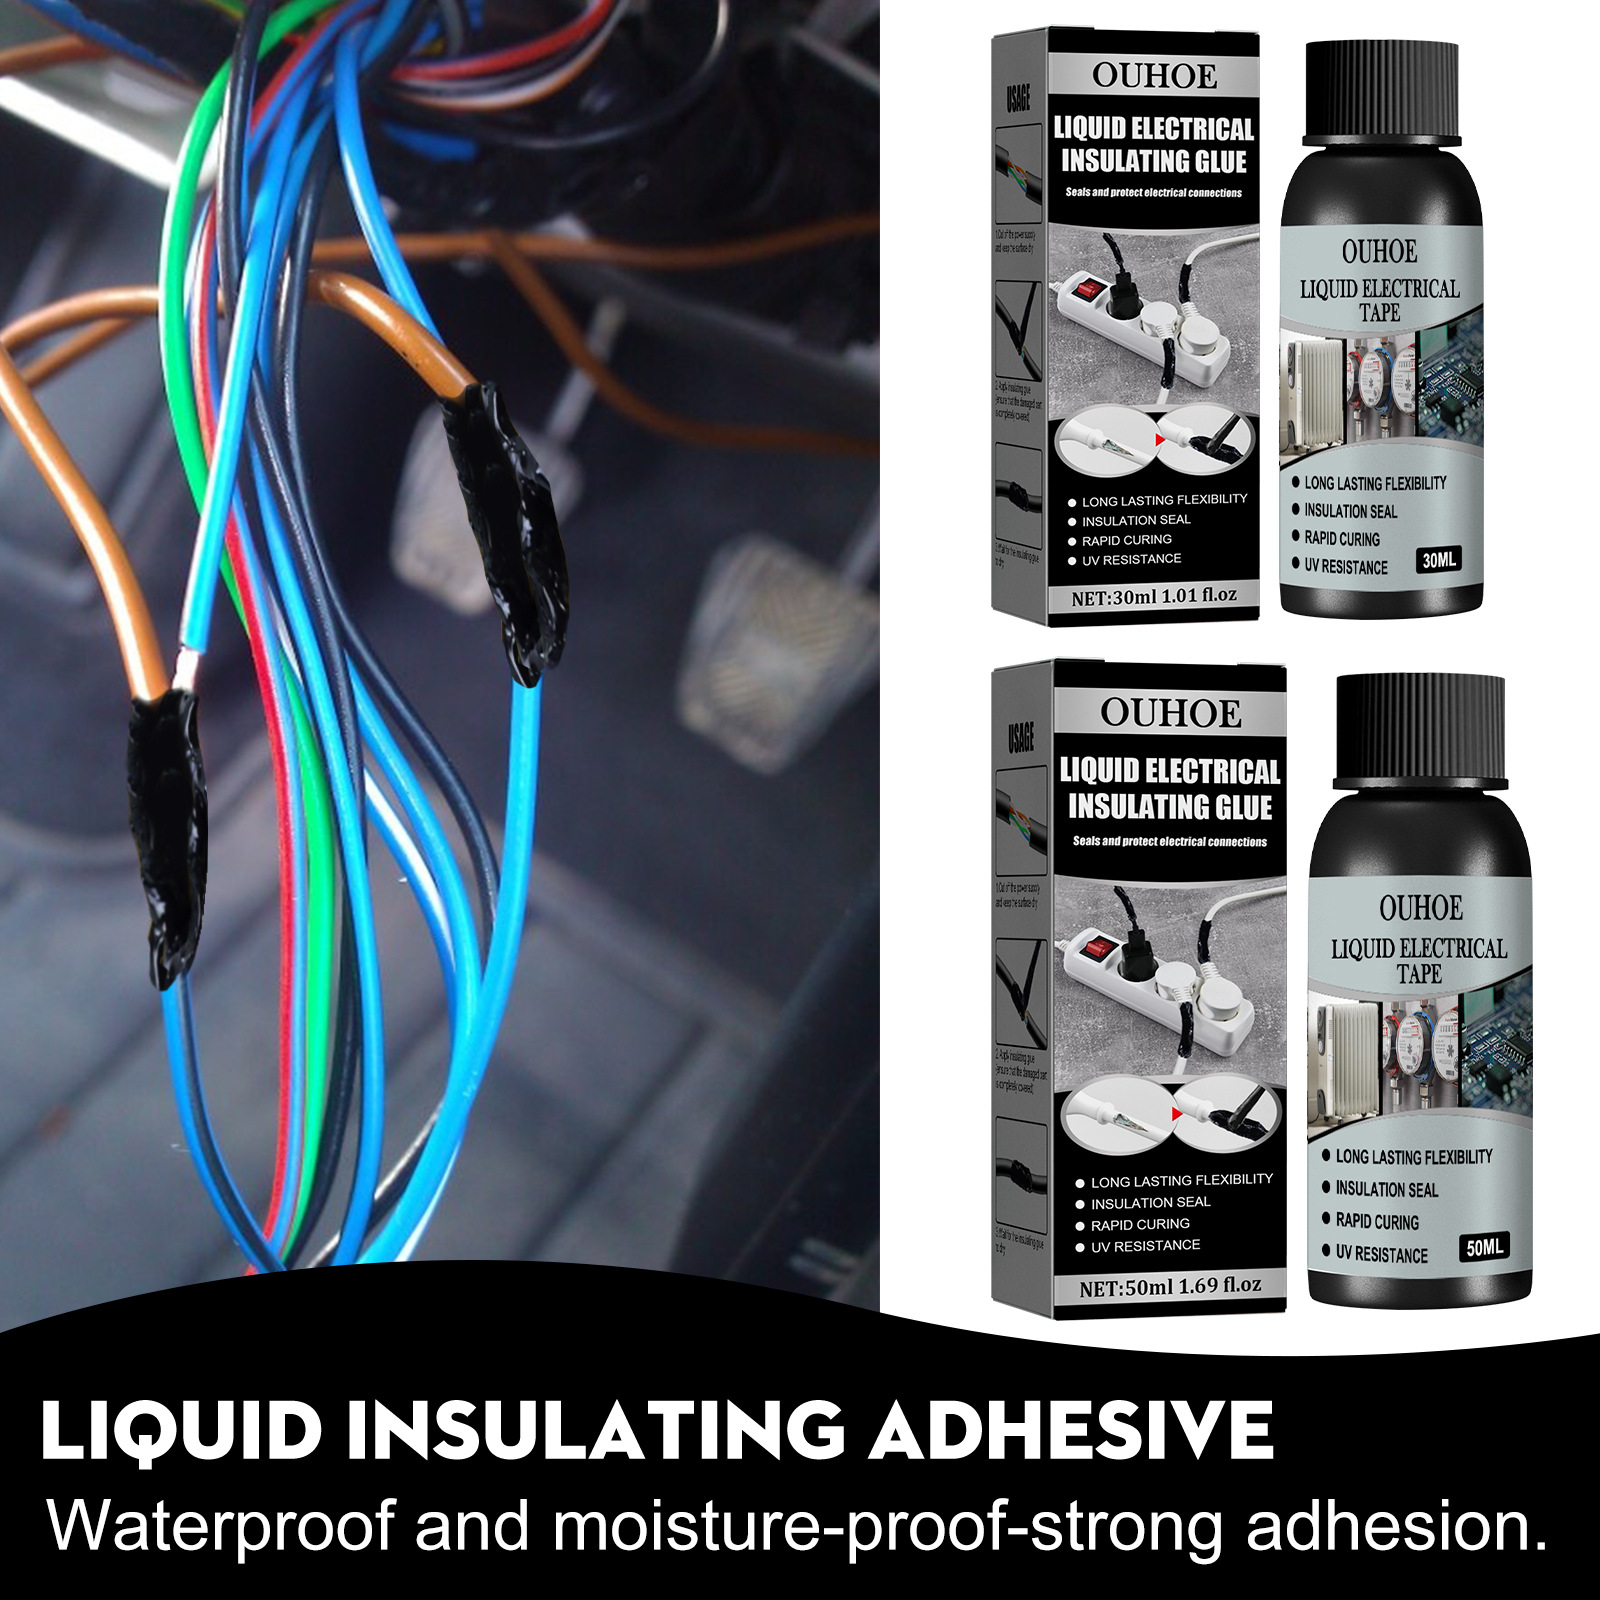 Waterproof Insulation Electrical Sealant Liquid Tape High Temperature  Resistant Liquid Insulating Rubber Coat